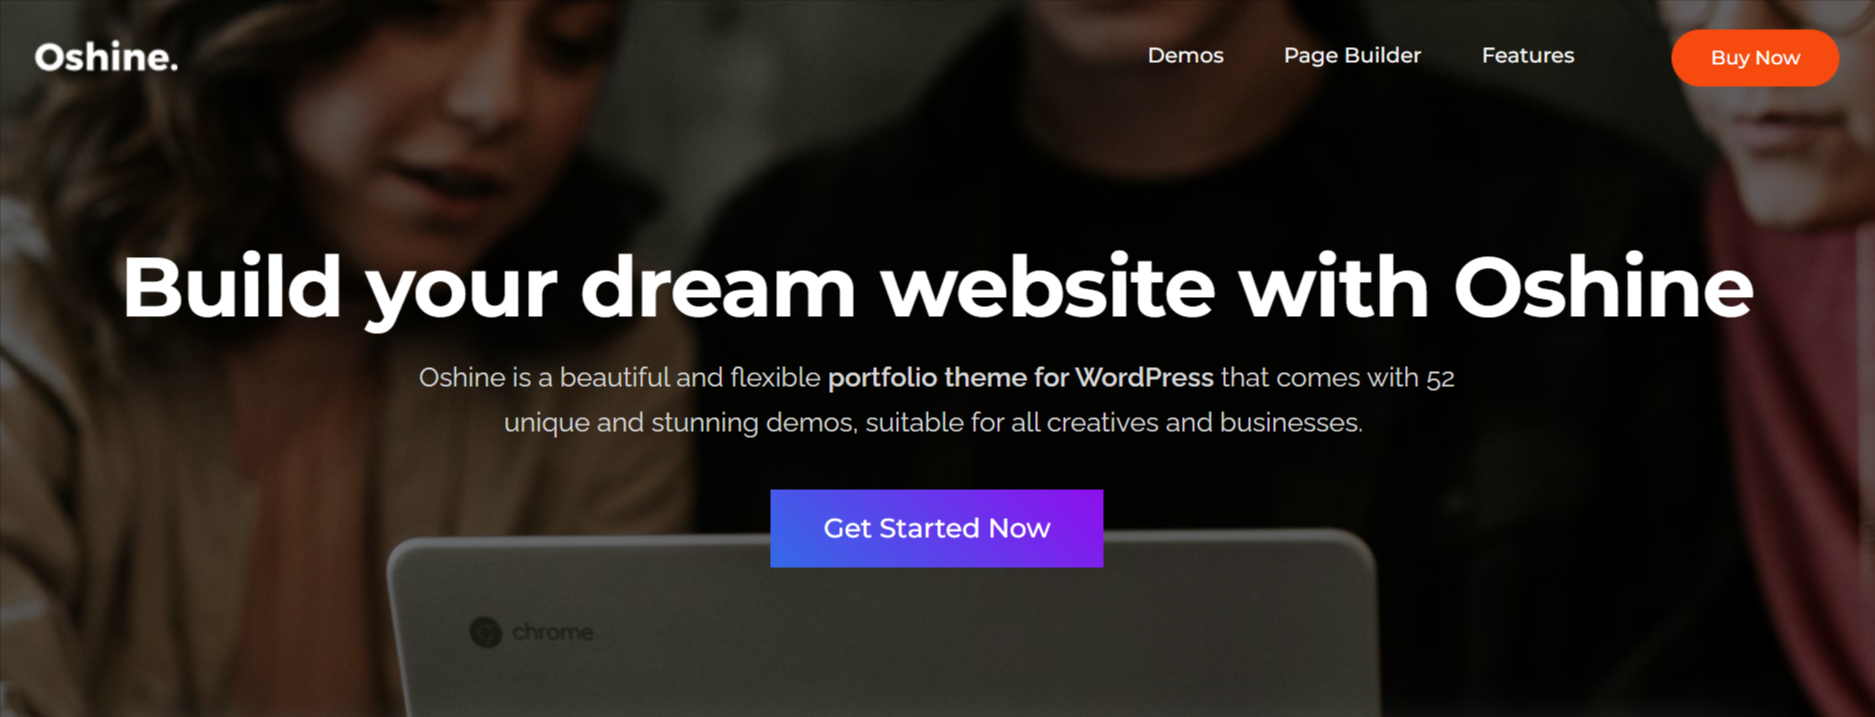 Oshine - WordPress Themes For Life Coaching Website